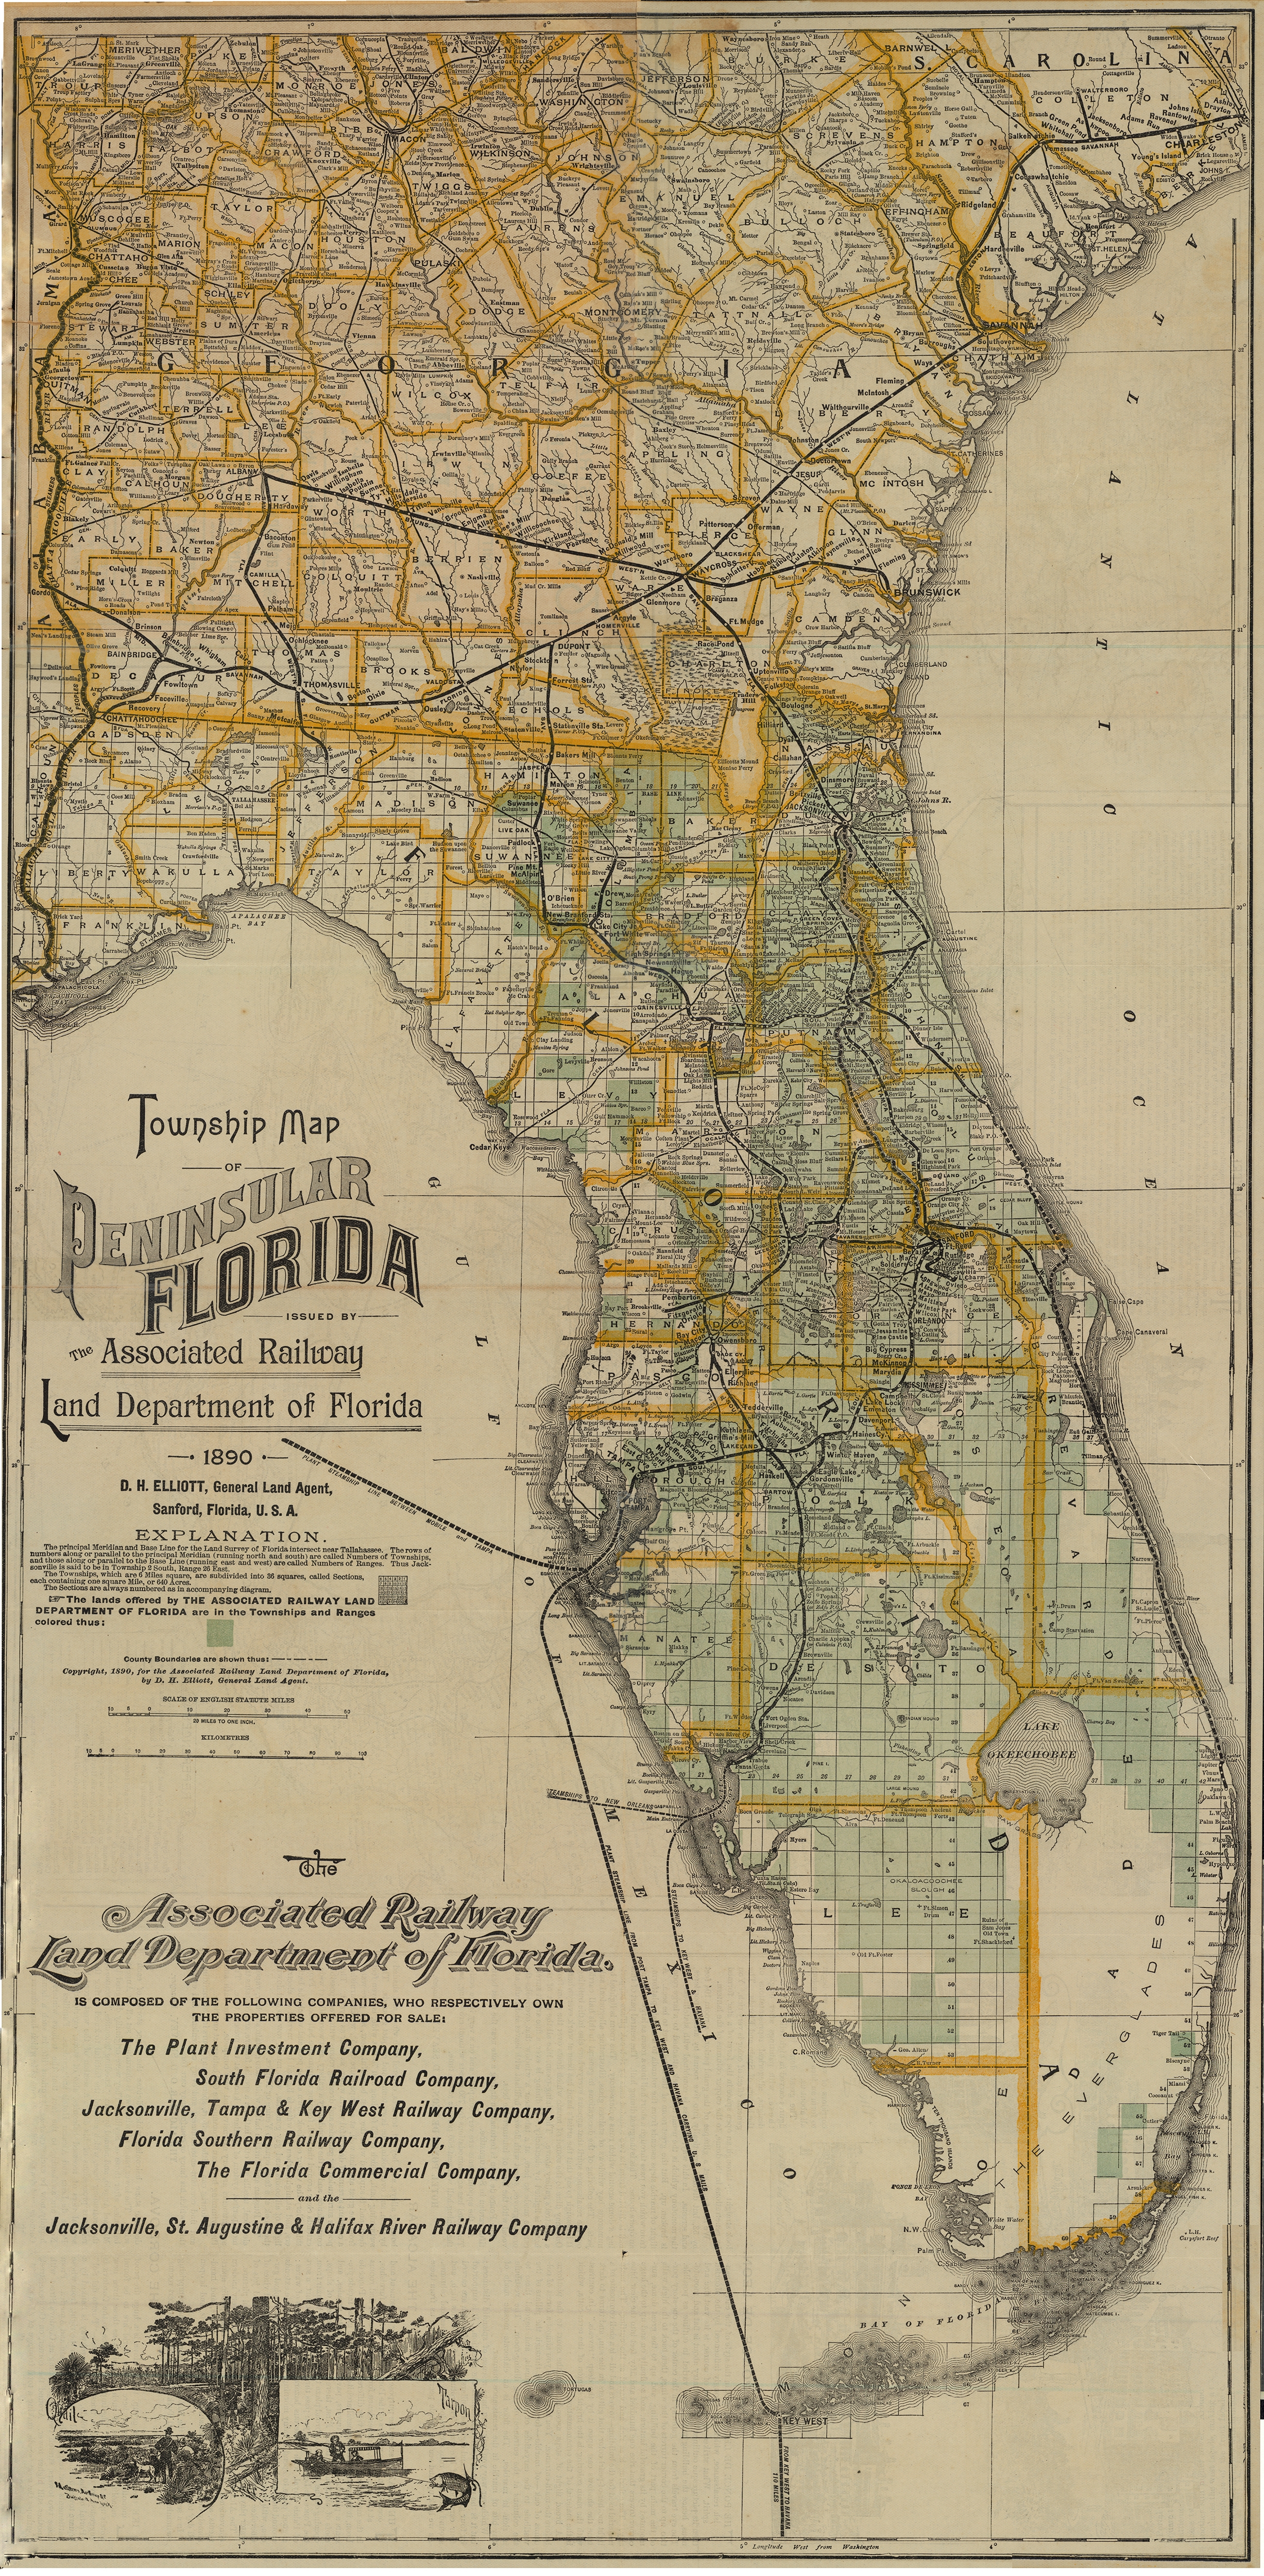 Township Map of Florida, 1890